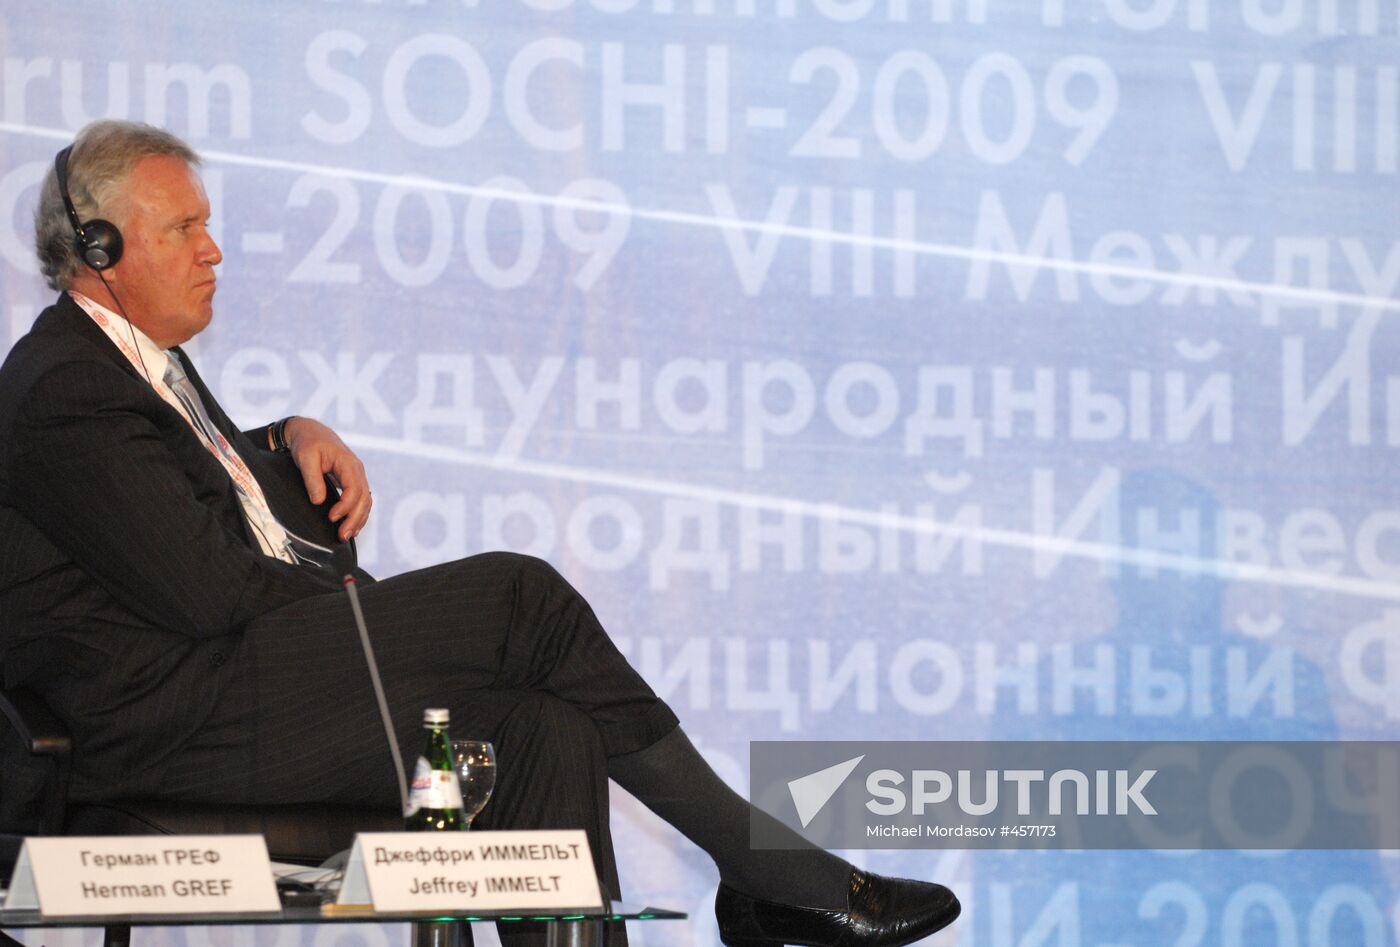 Jeffrey R. Immelt at International Investment Forum Sochi 2009